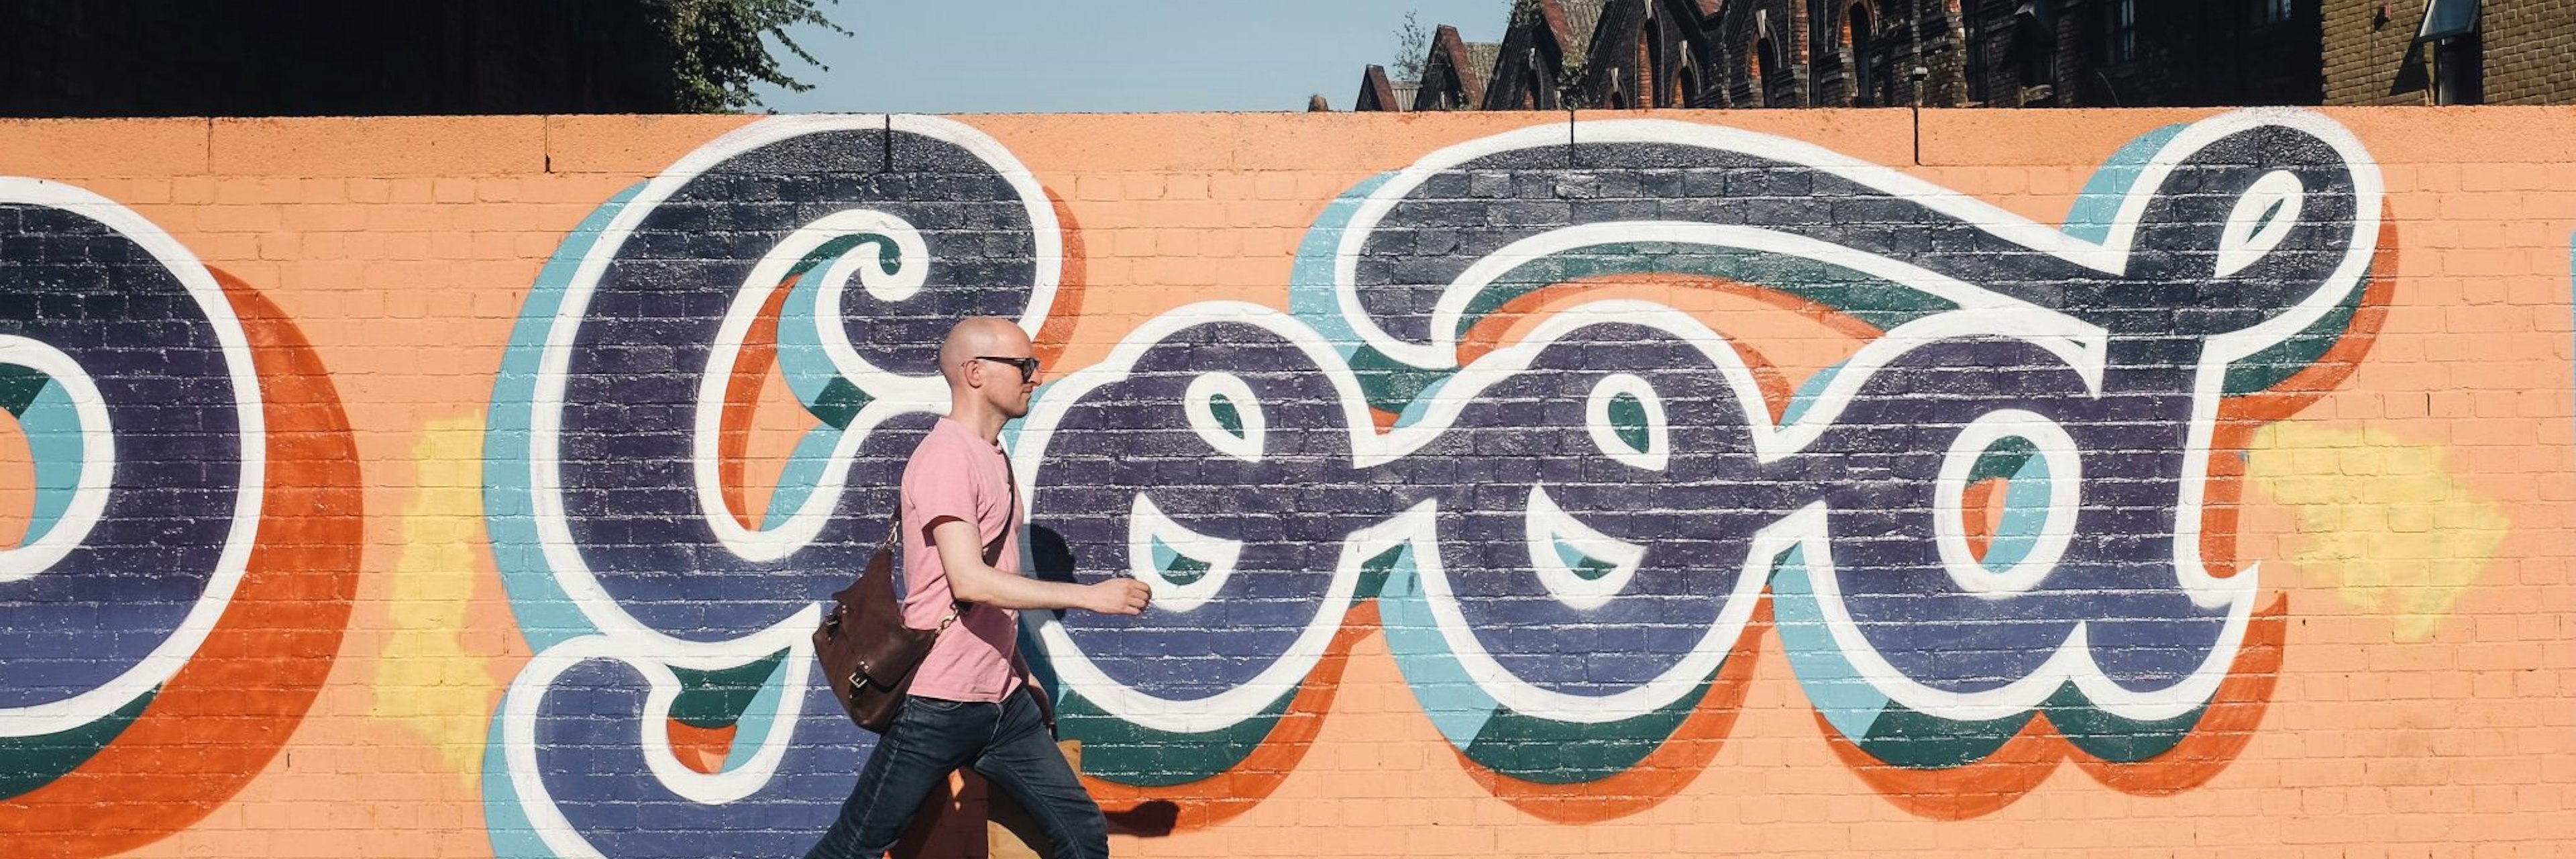 Man walking next to wall with graffiti